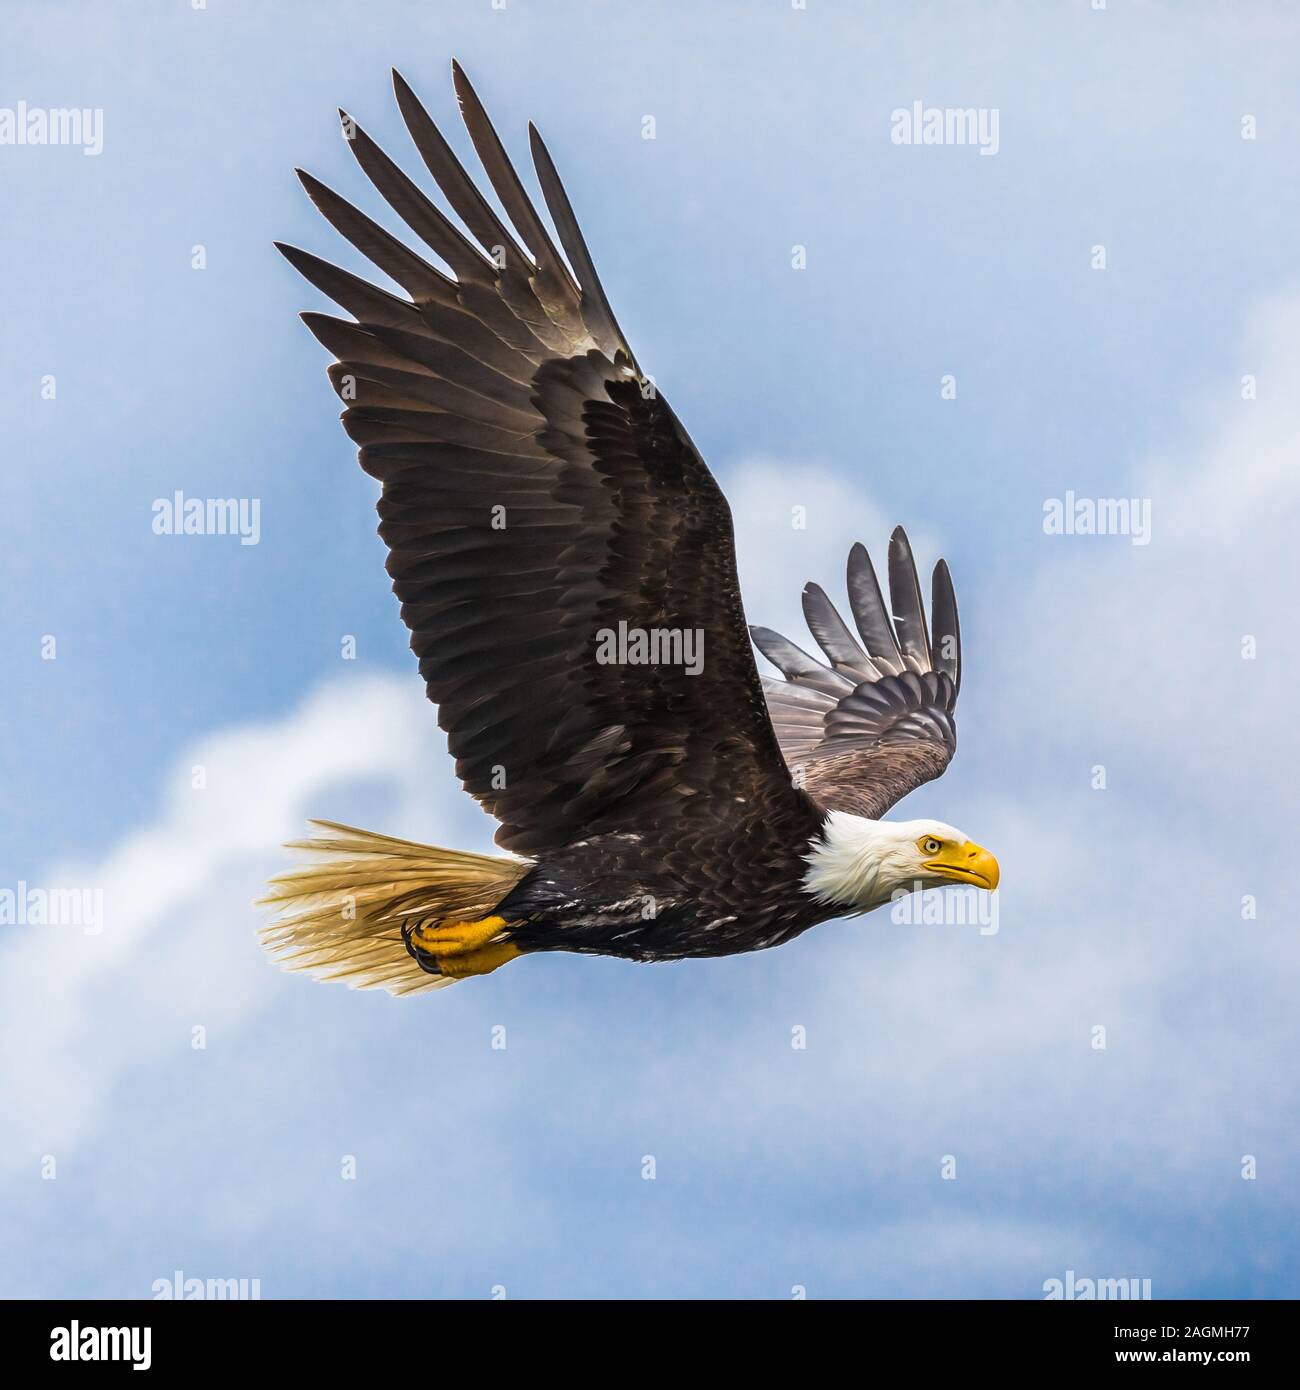 Wonderful shot af a Bald Eagle (haliaeetus leucocephalus) flying in the sky Stock Photo